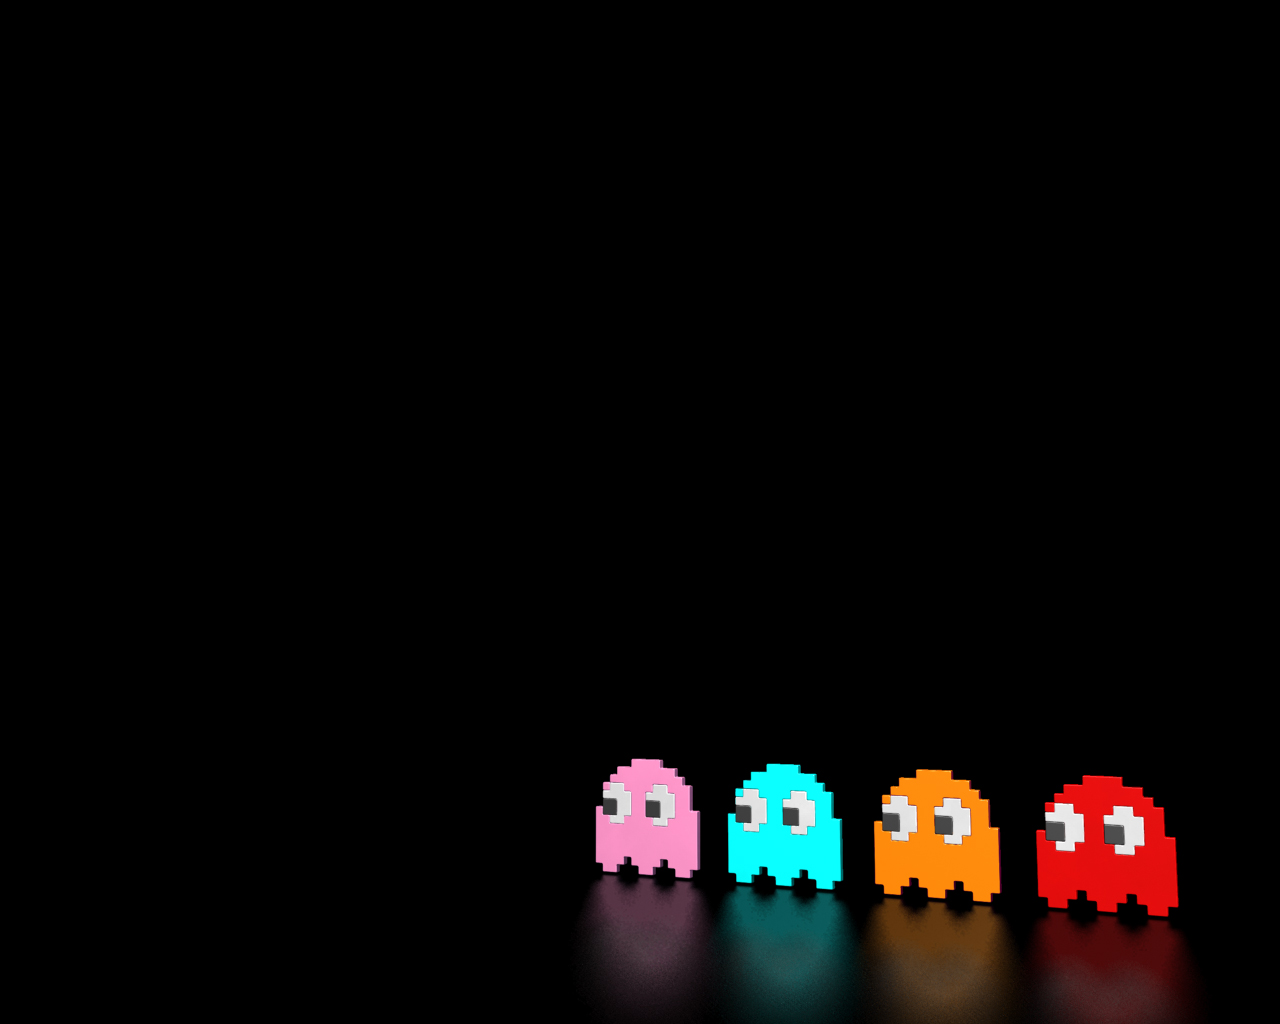 Pac-Man Picture by John DeLaCruz